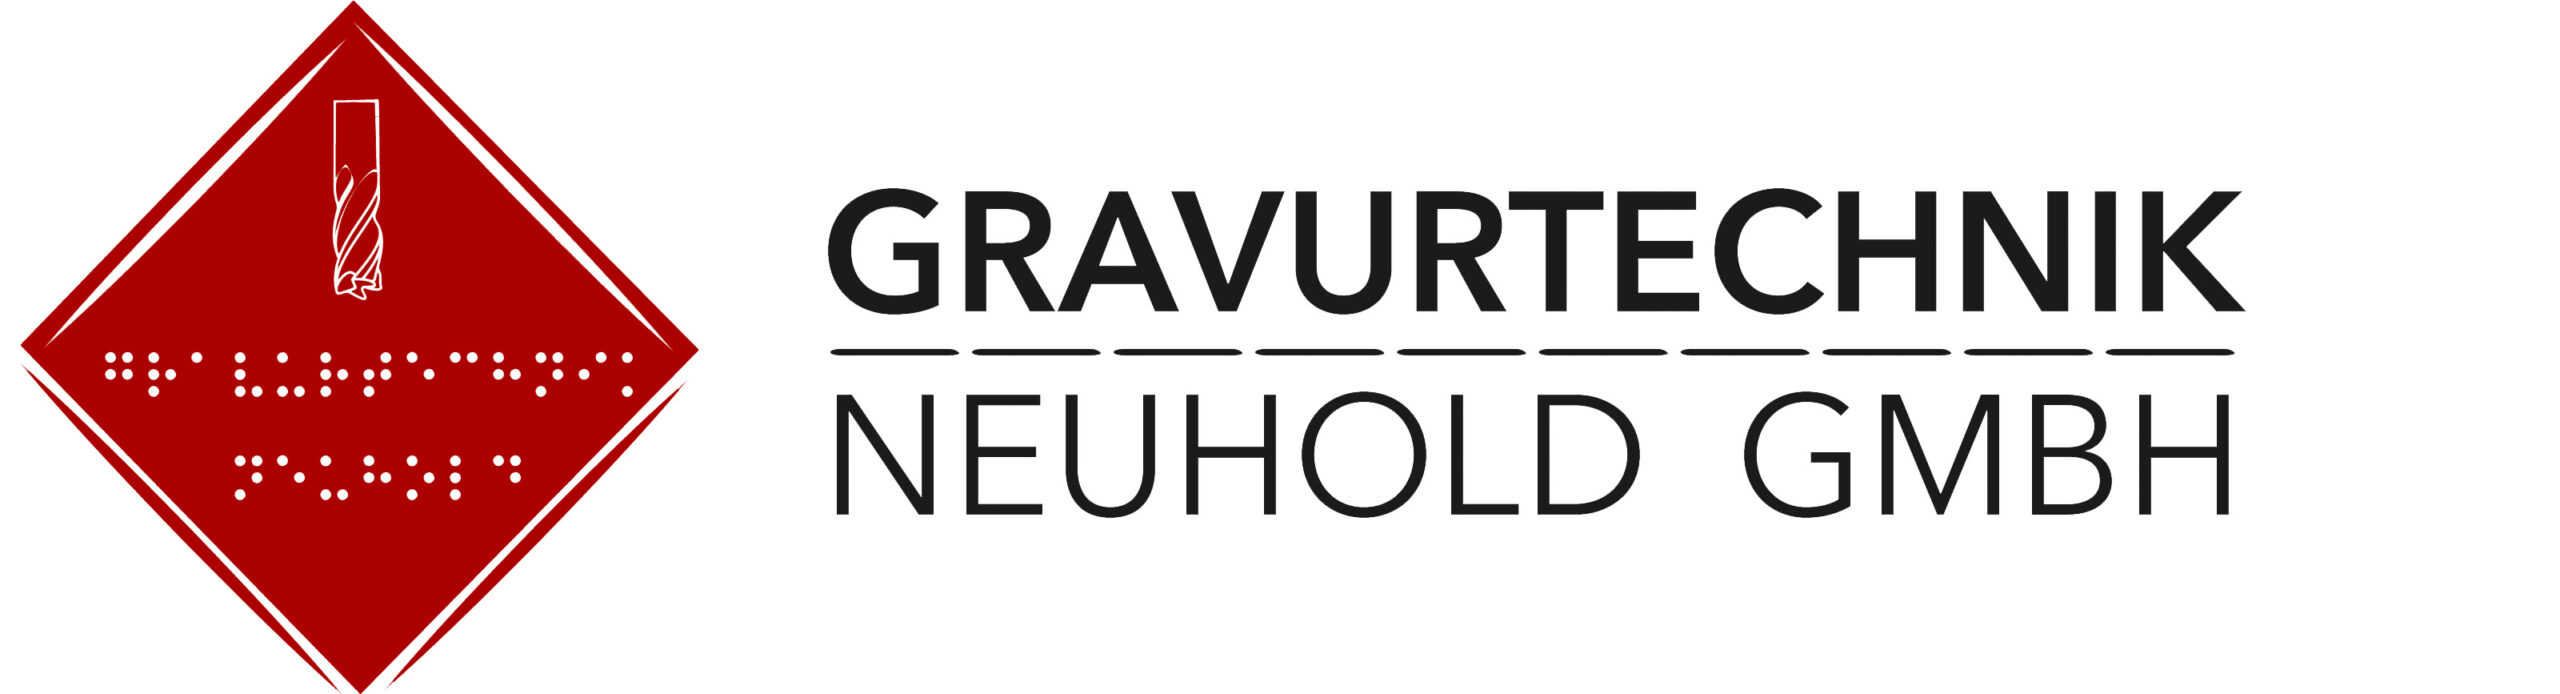 Gravurtechnik Neuhold GmbH